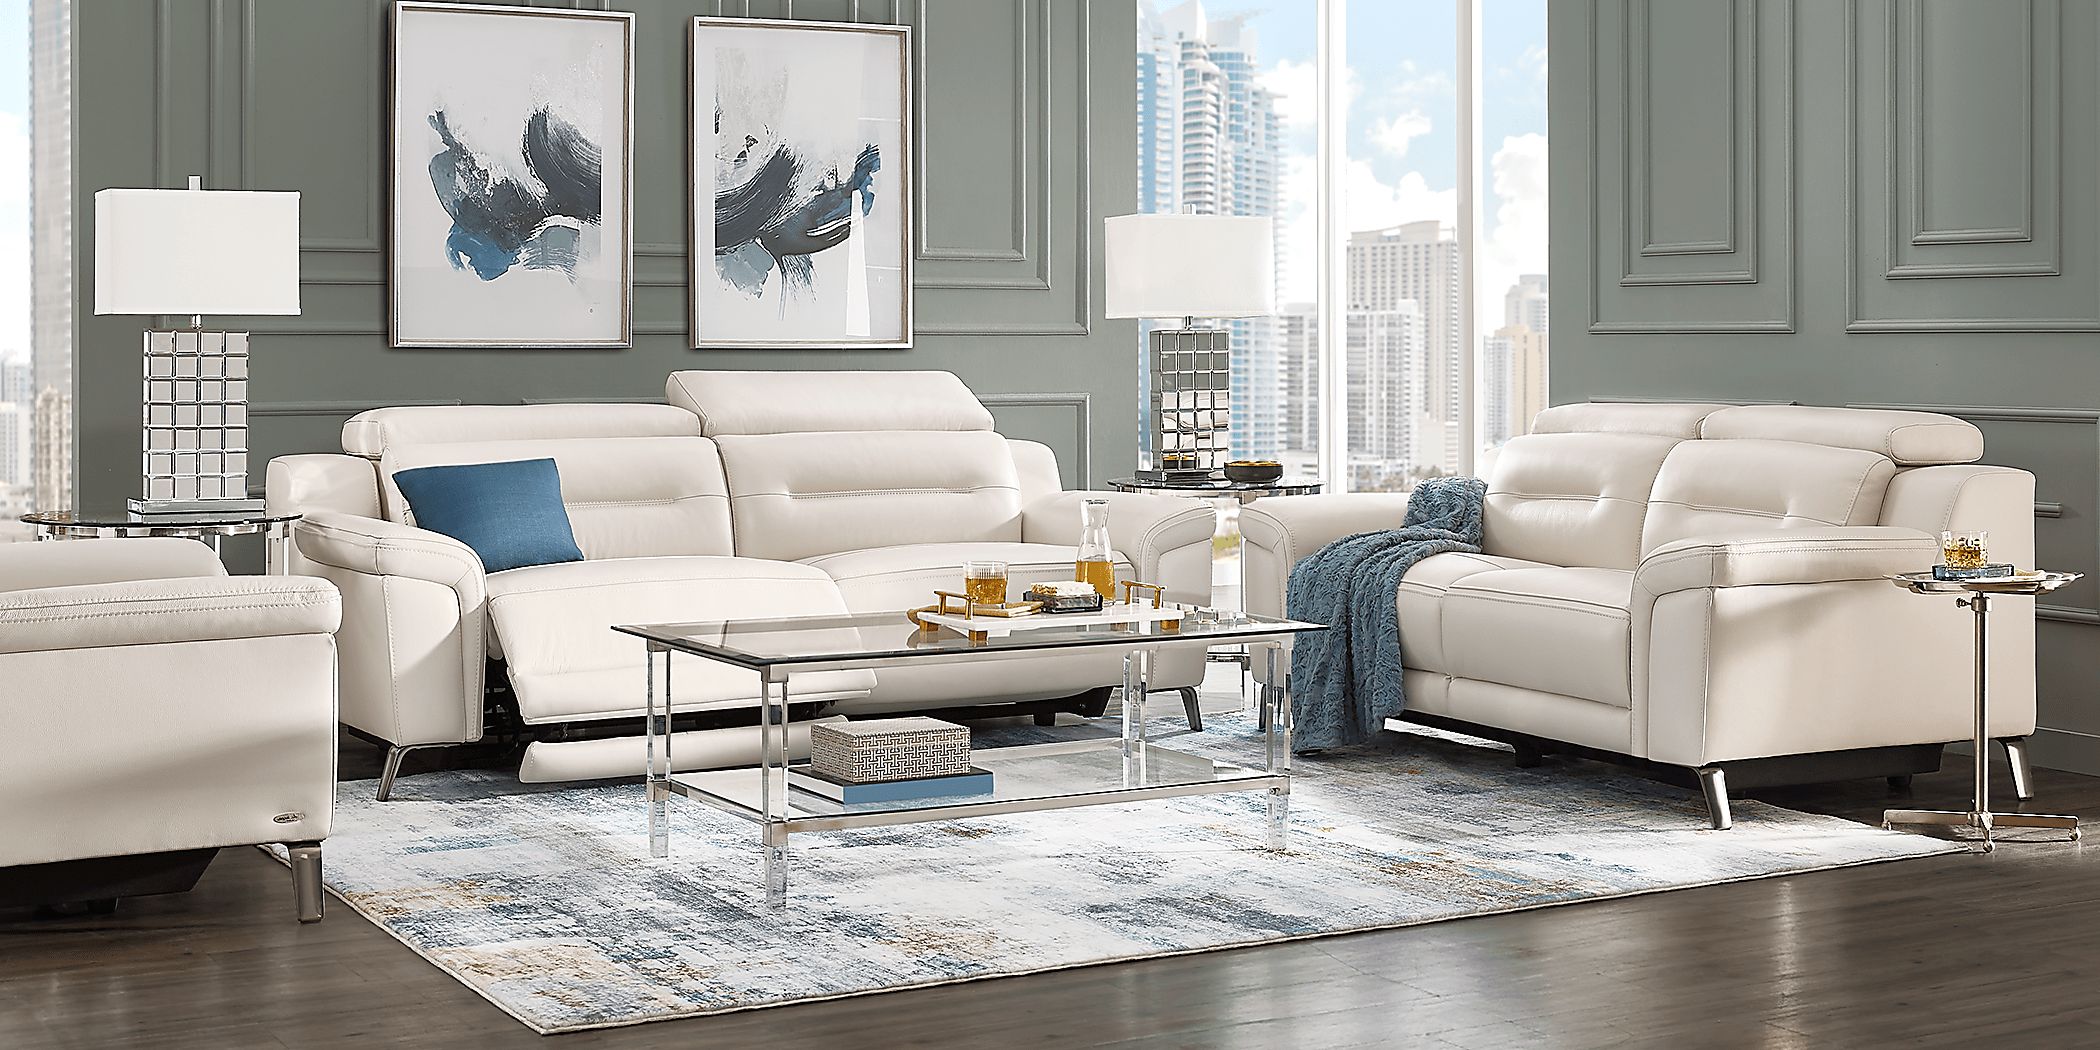 Blue Leather Moana Recliner An Couch Recliner Wayfair, 57% Off